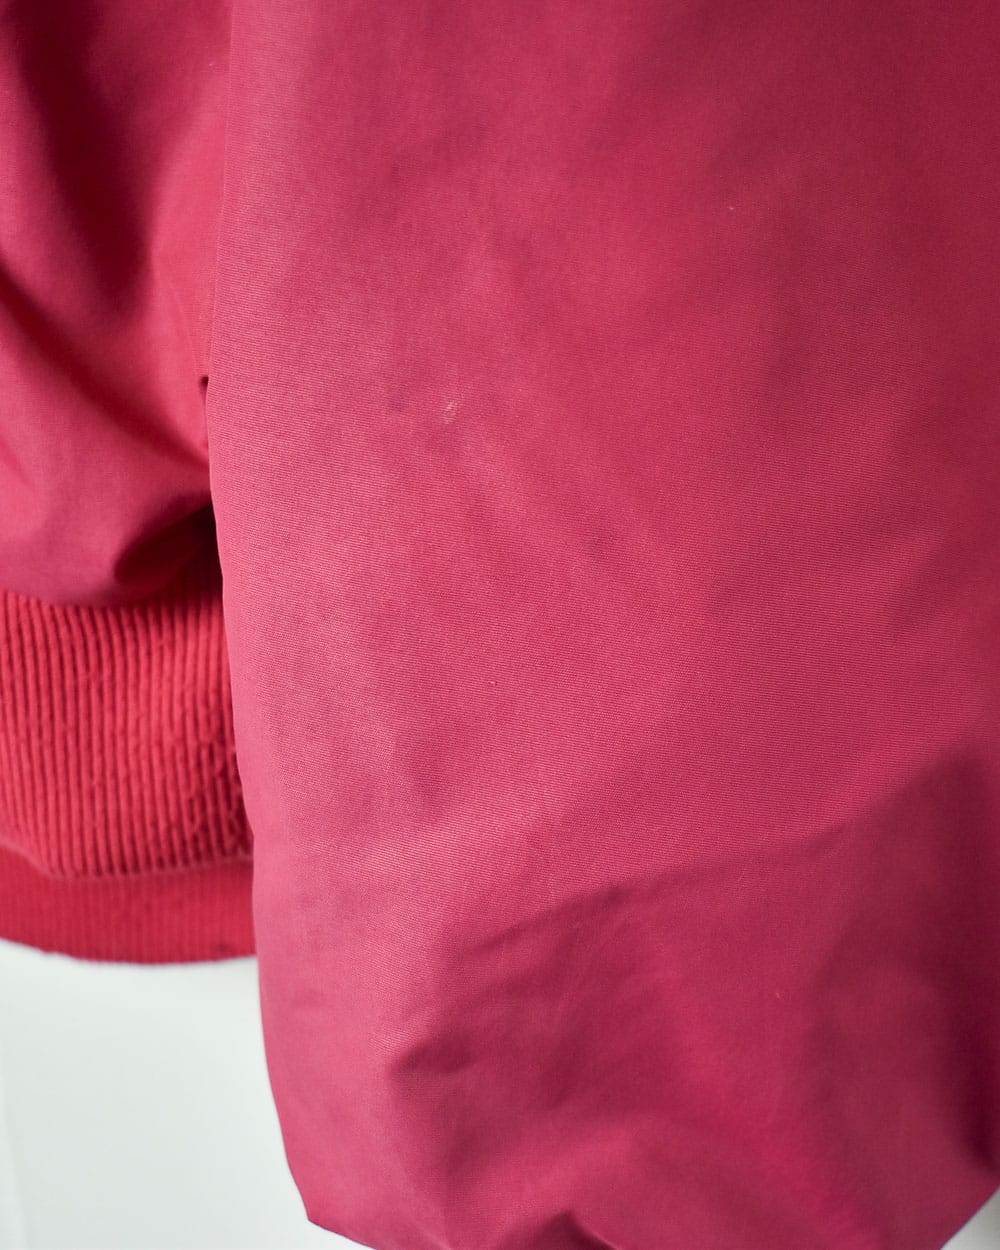 Pink Patagonia Ladies Cup 89 80s Fleece Lined Jacket - Large Women's